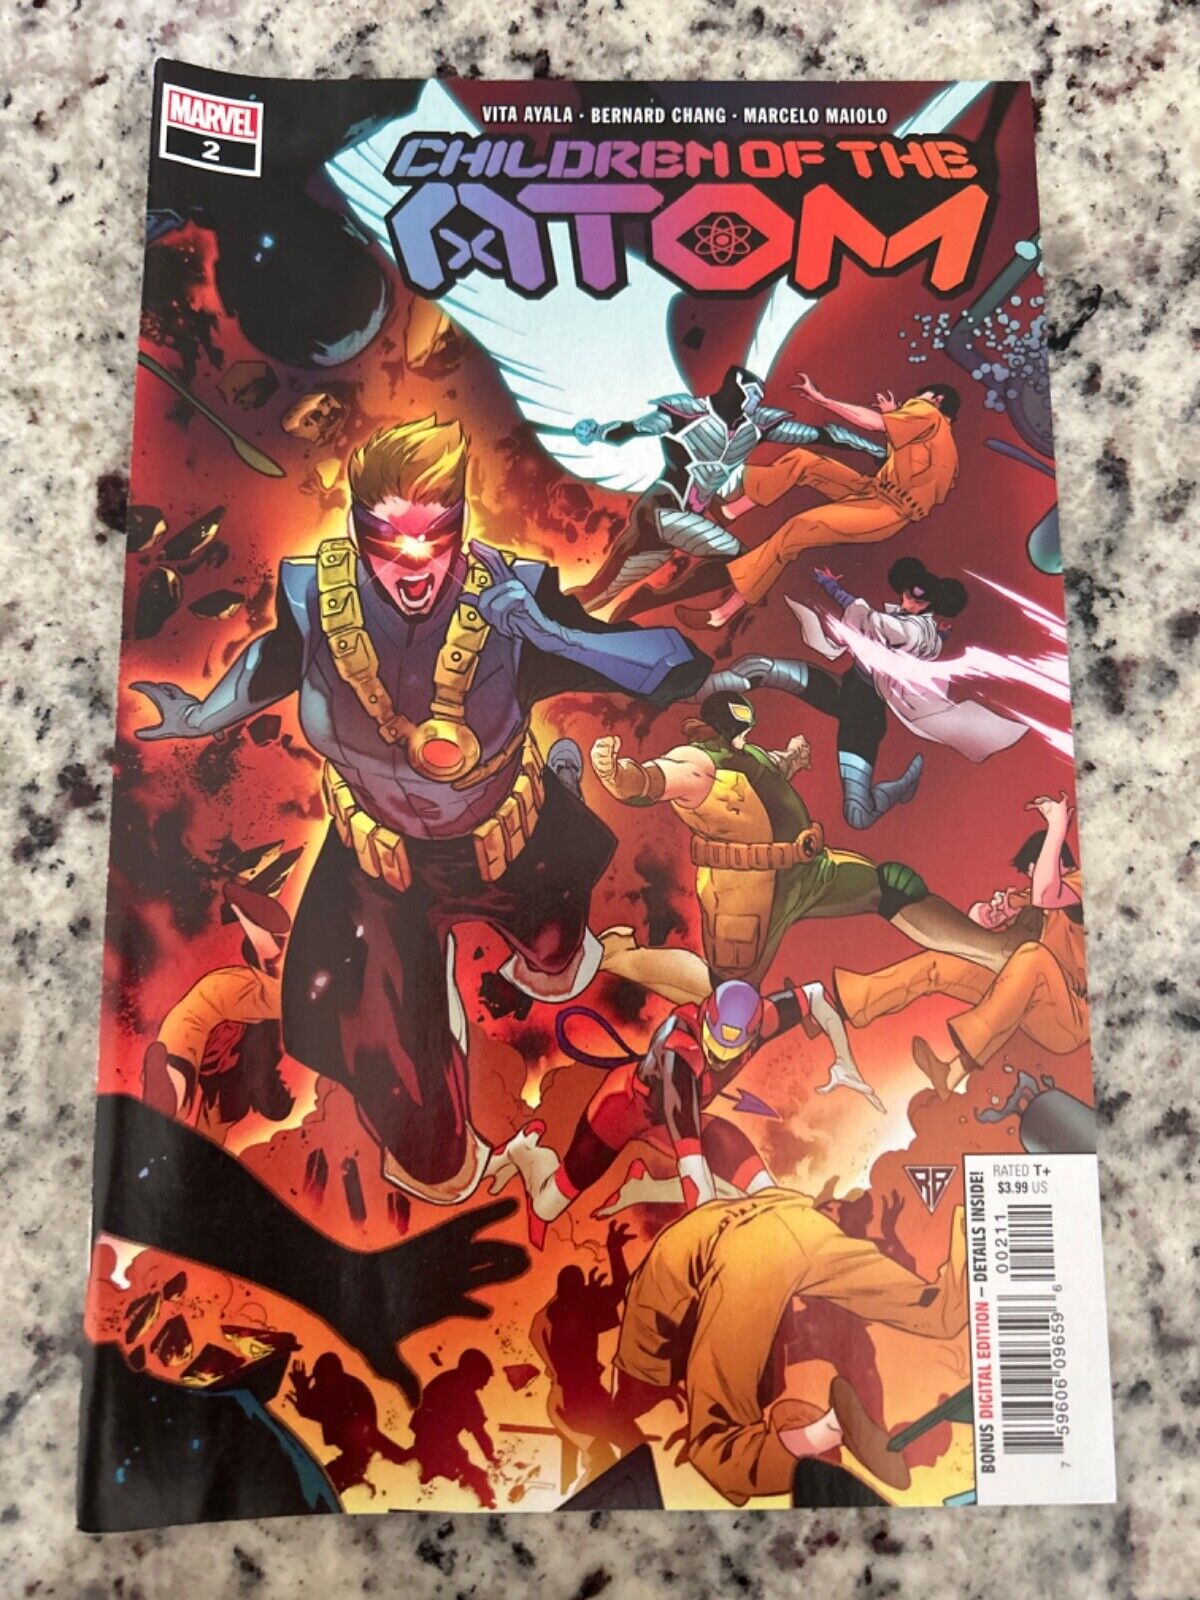 Children of the Atom #2 Vol. 1 (Marvel, 2021) ungraded